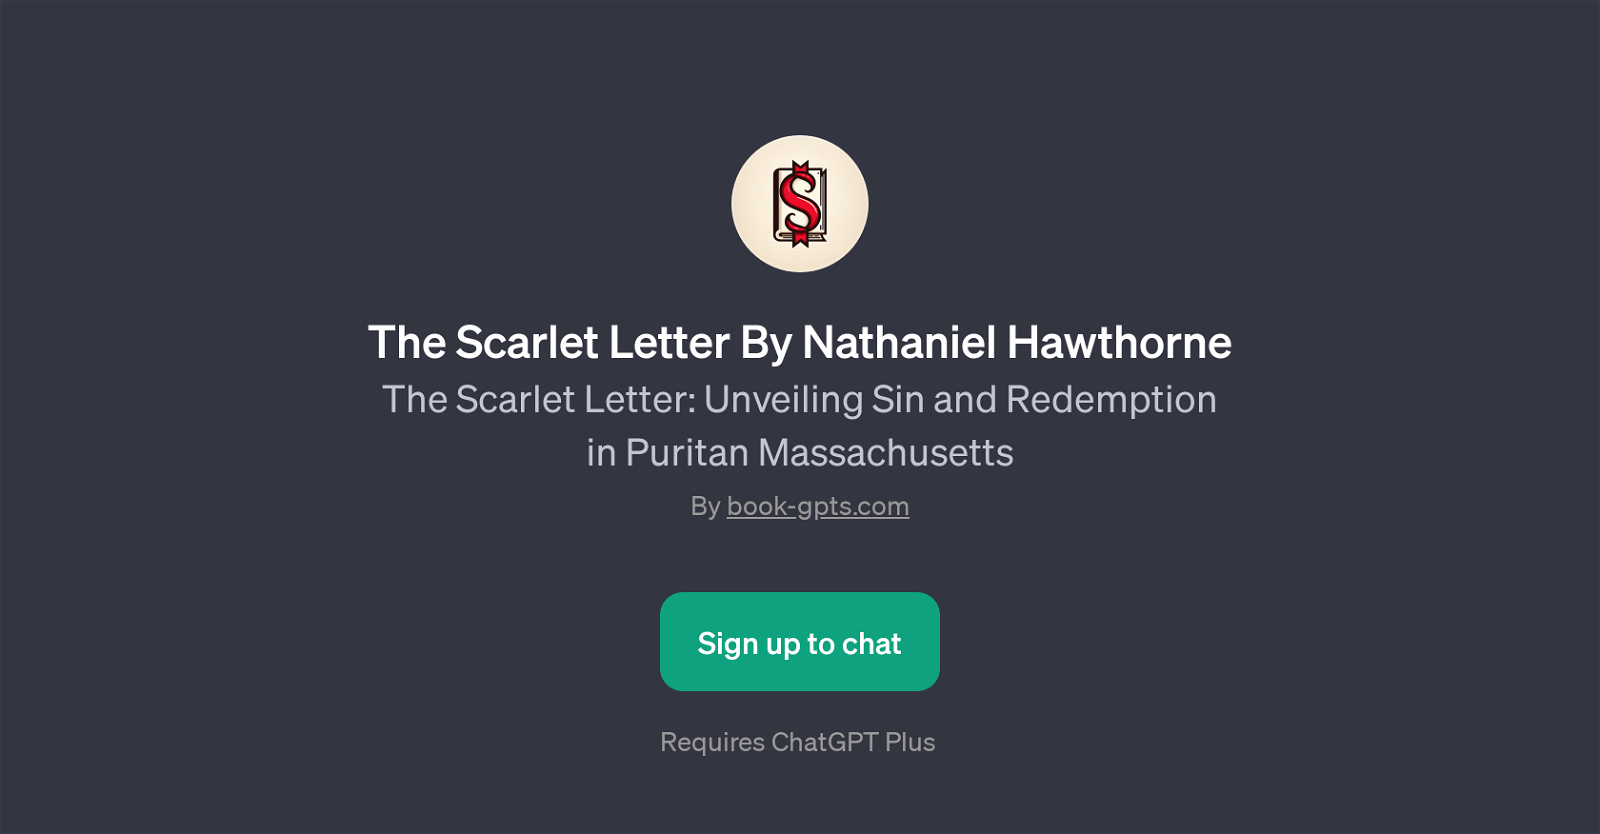 The Scarlet Letter By Nathaniel Hawthorne GPT website